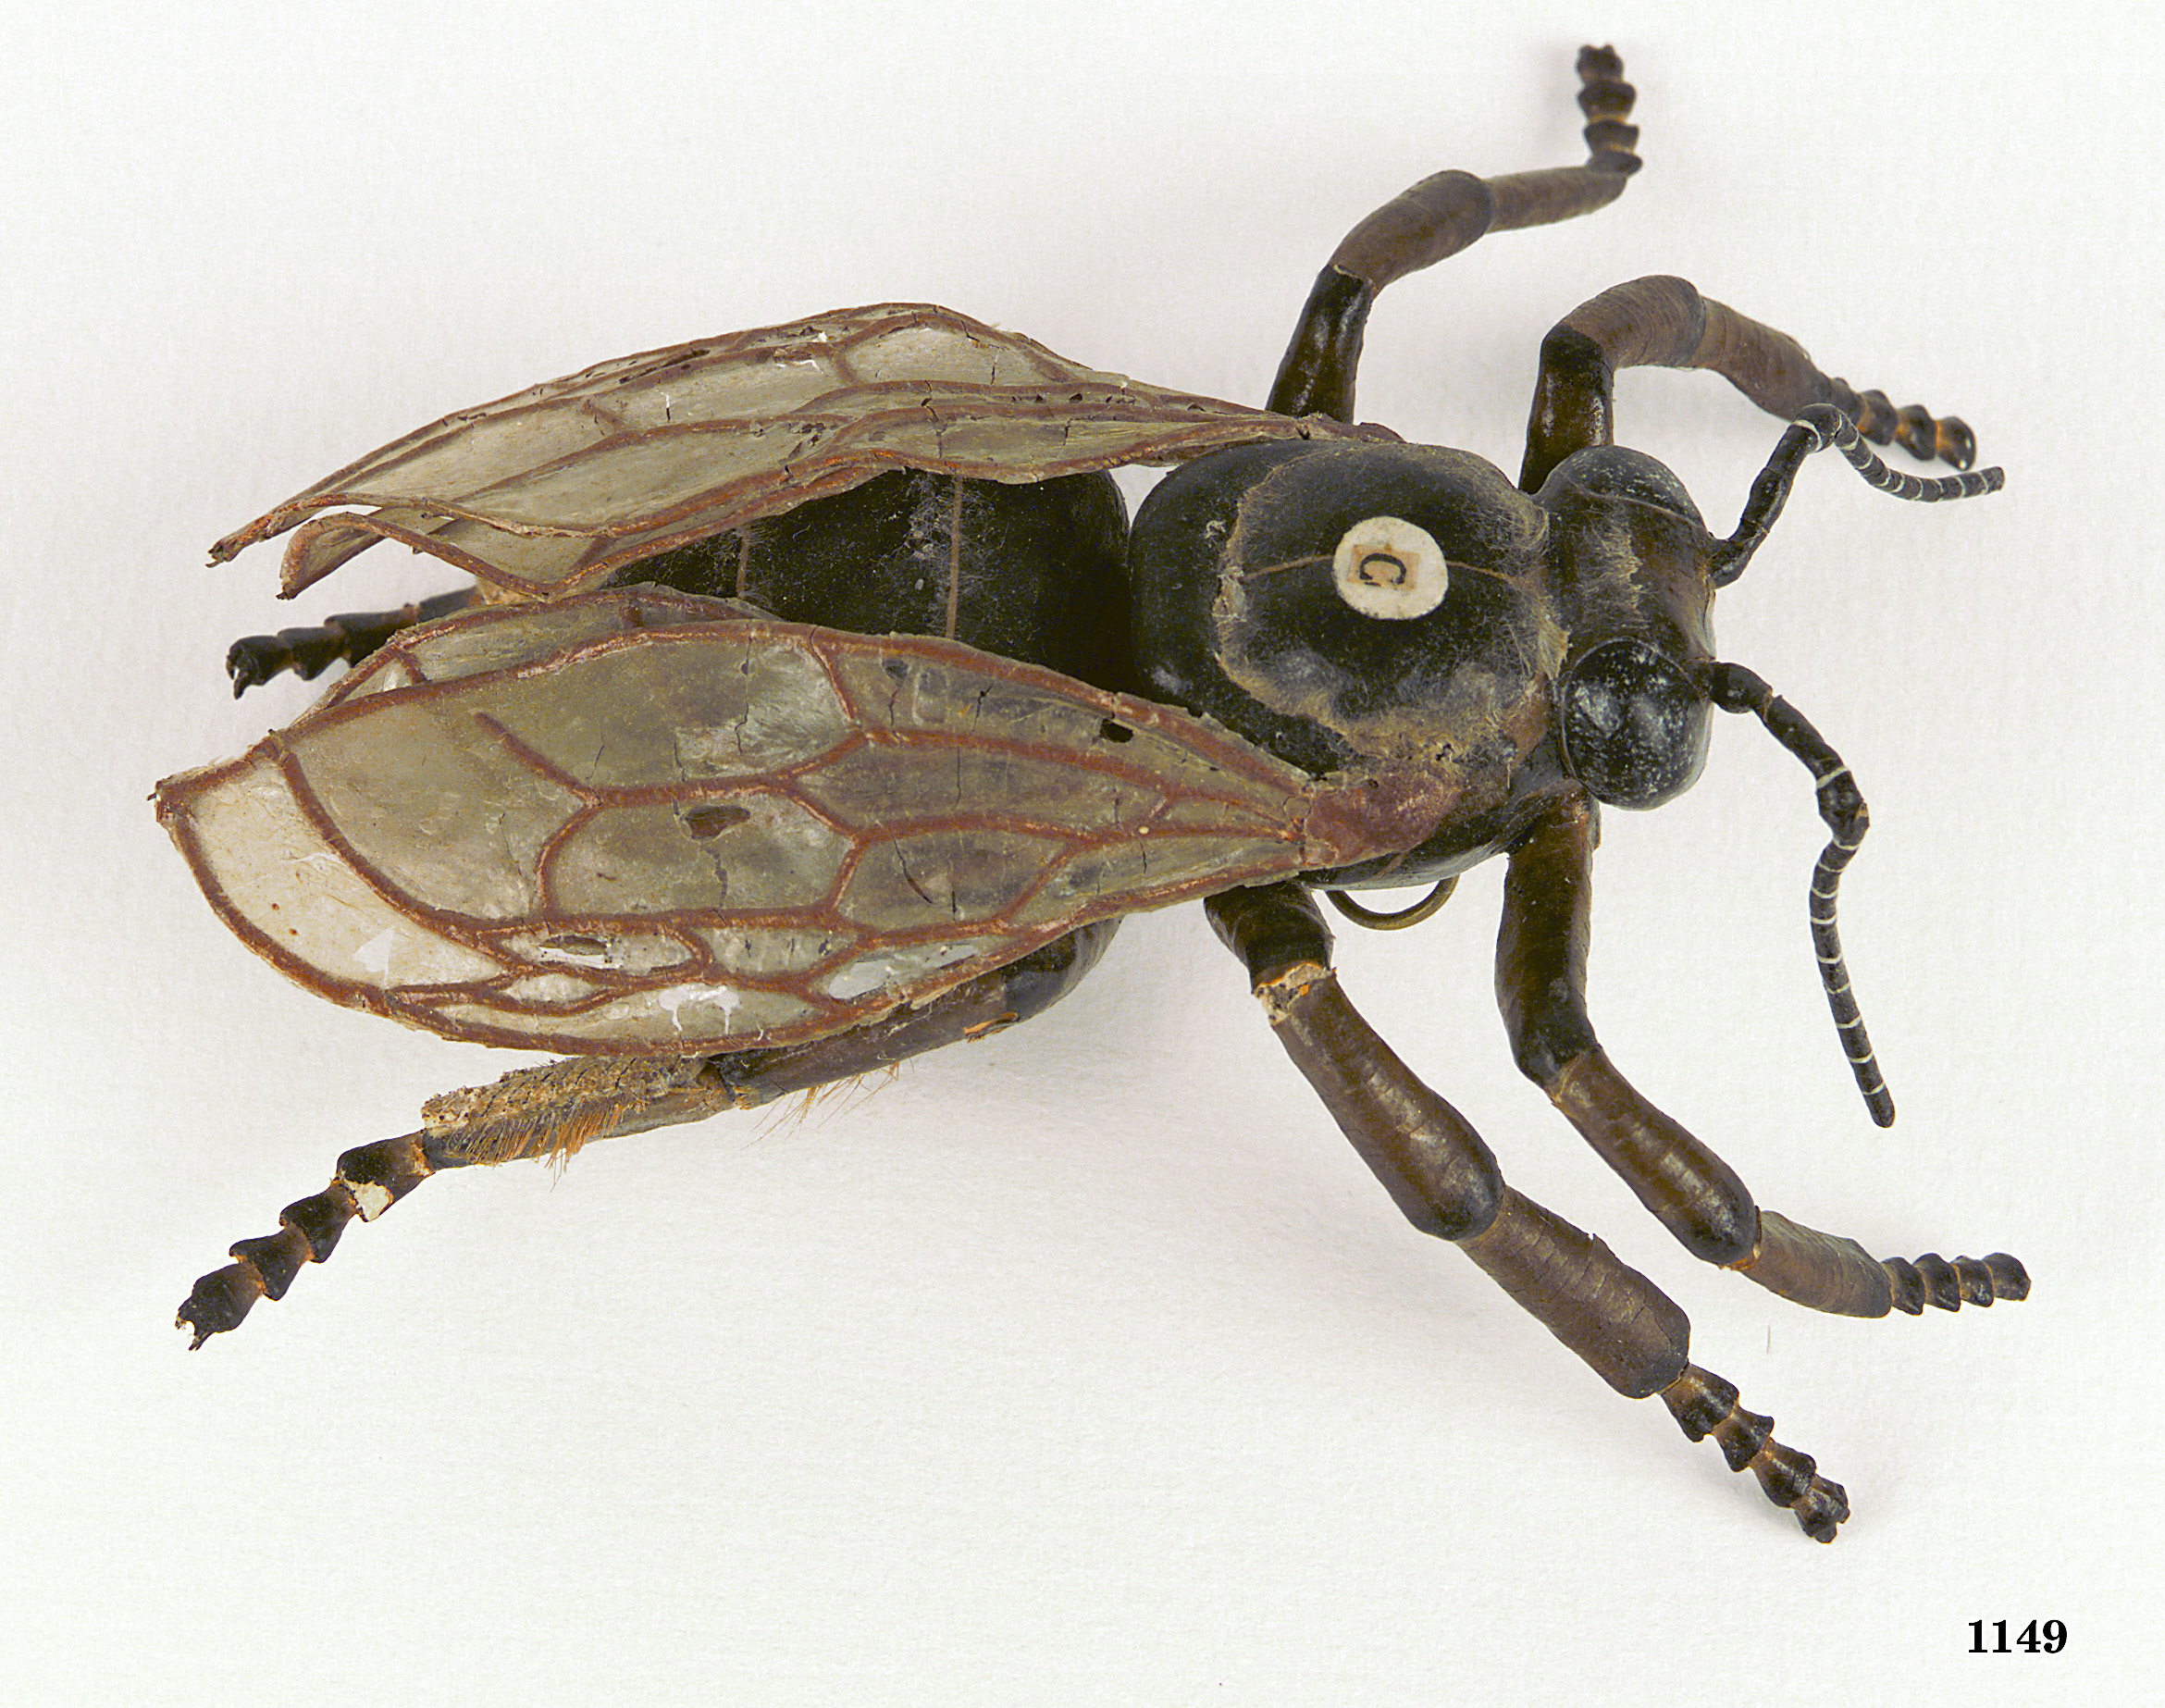 Model of a worker bee